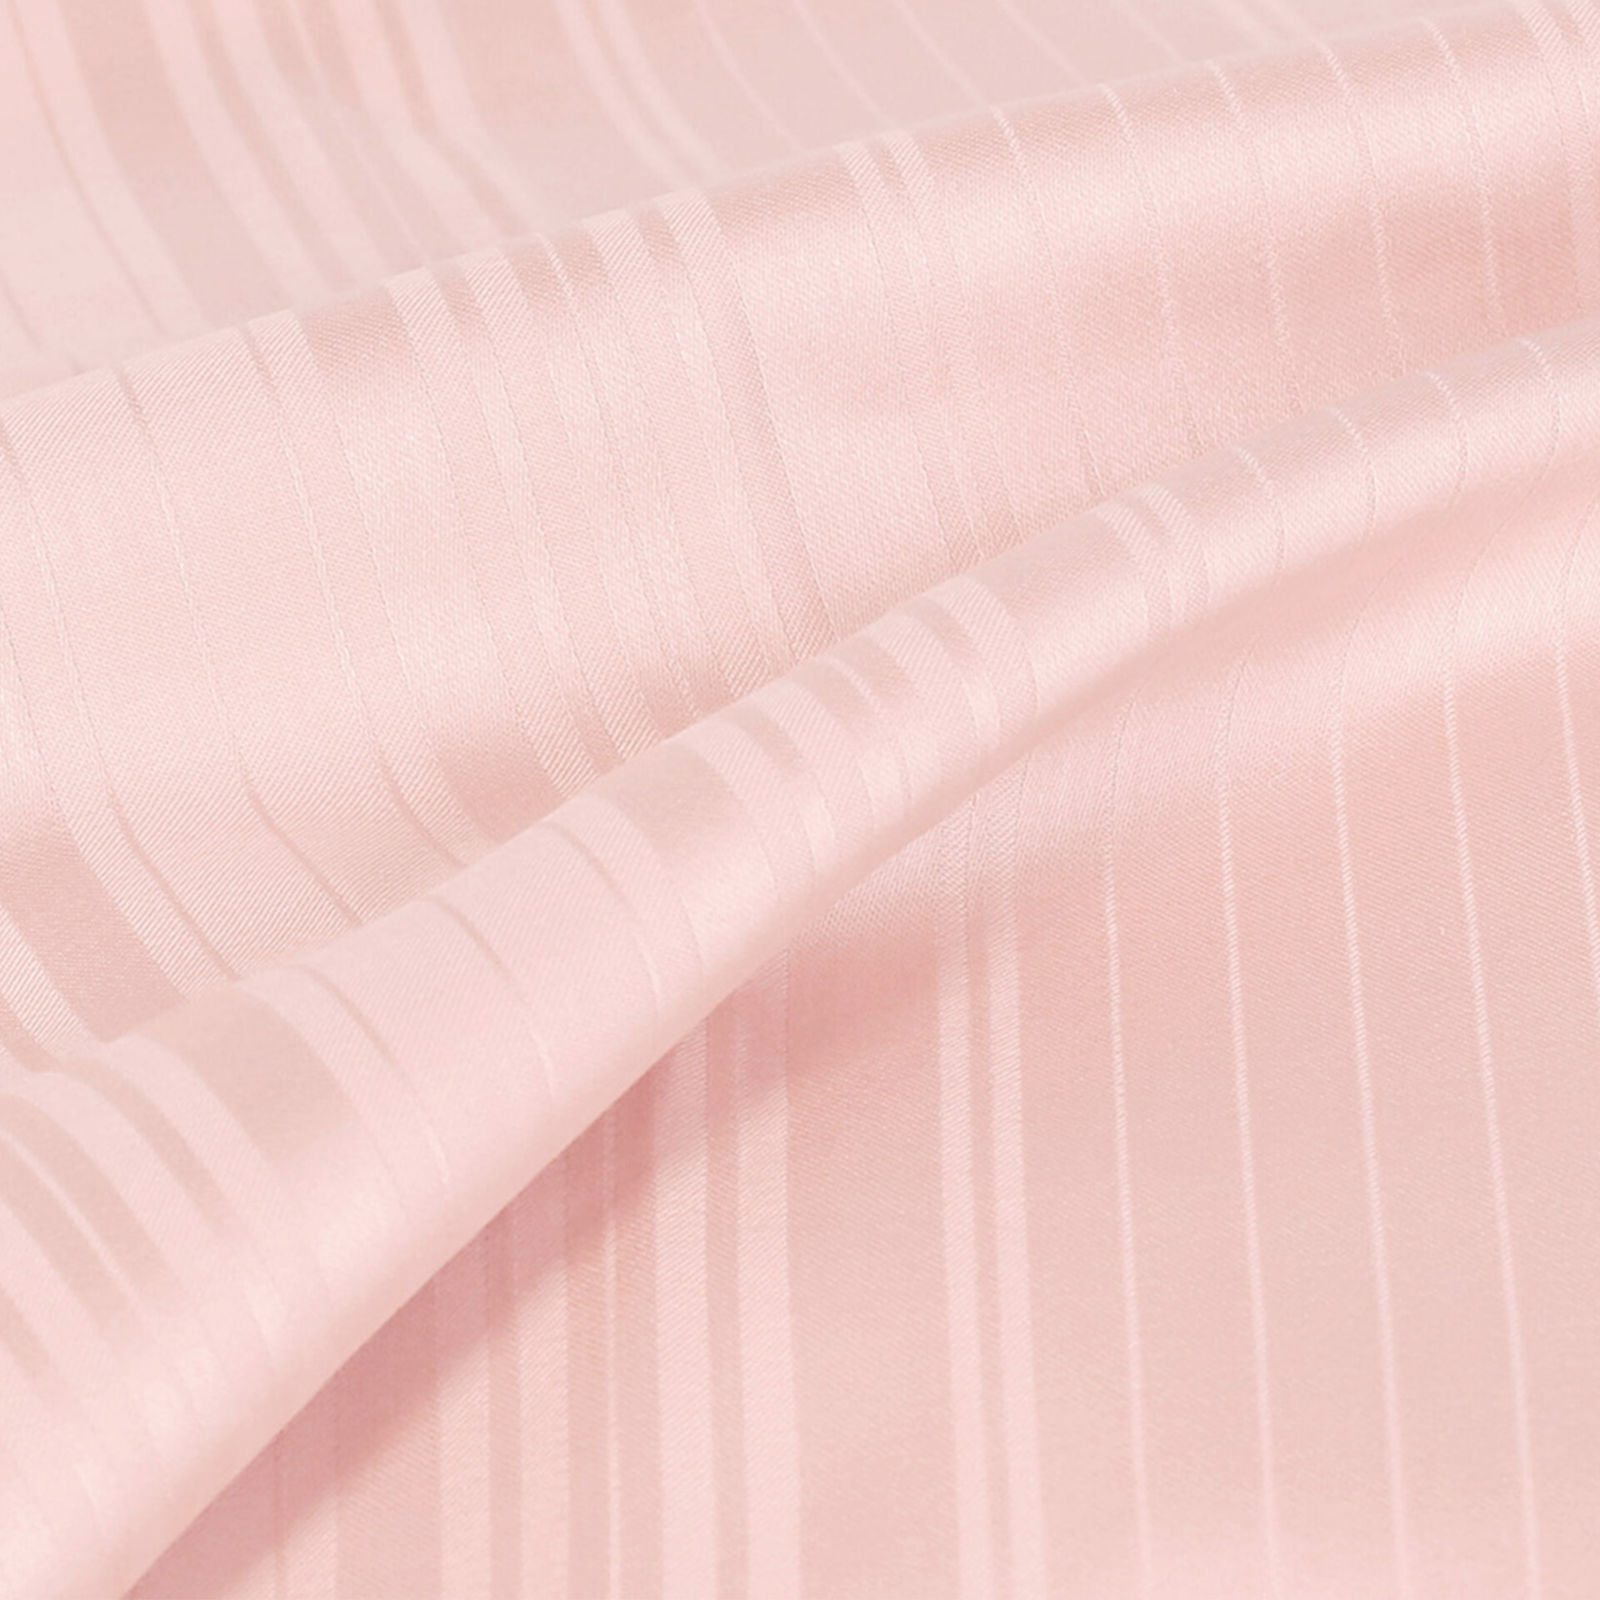 Lenjerie de pat Deluxe din damasc - roz cu dungi subțiri